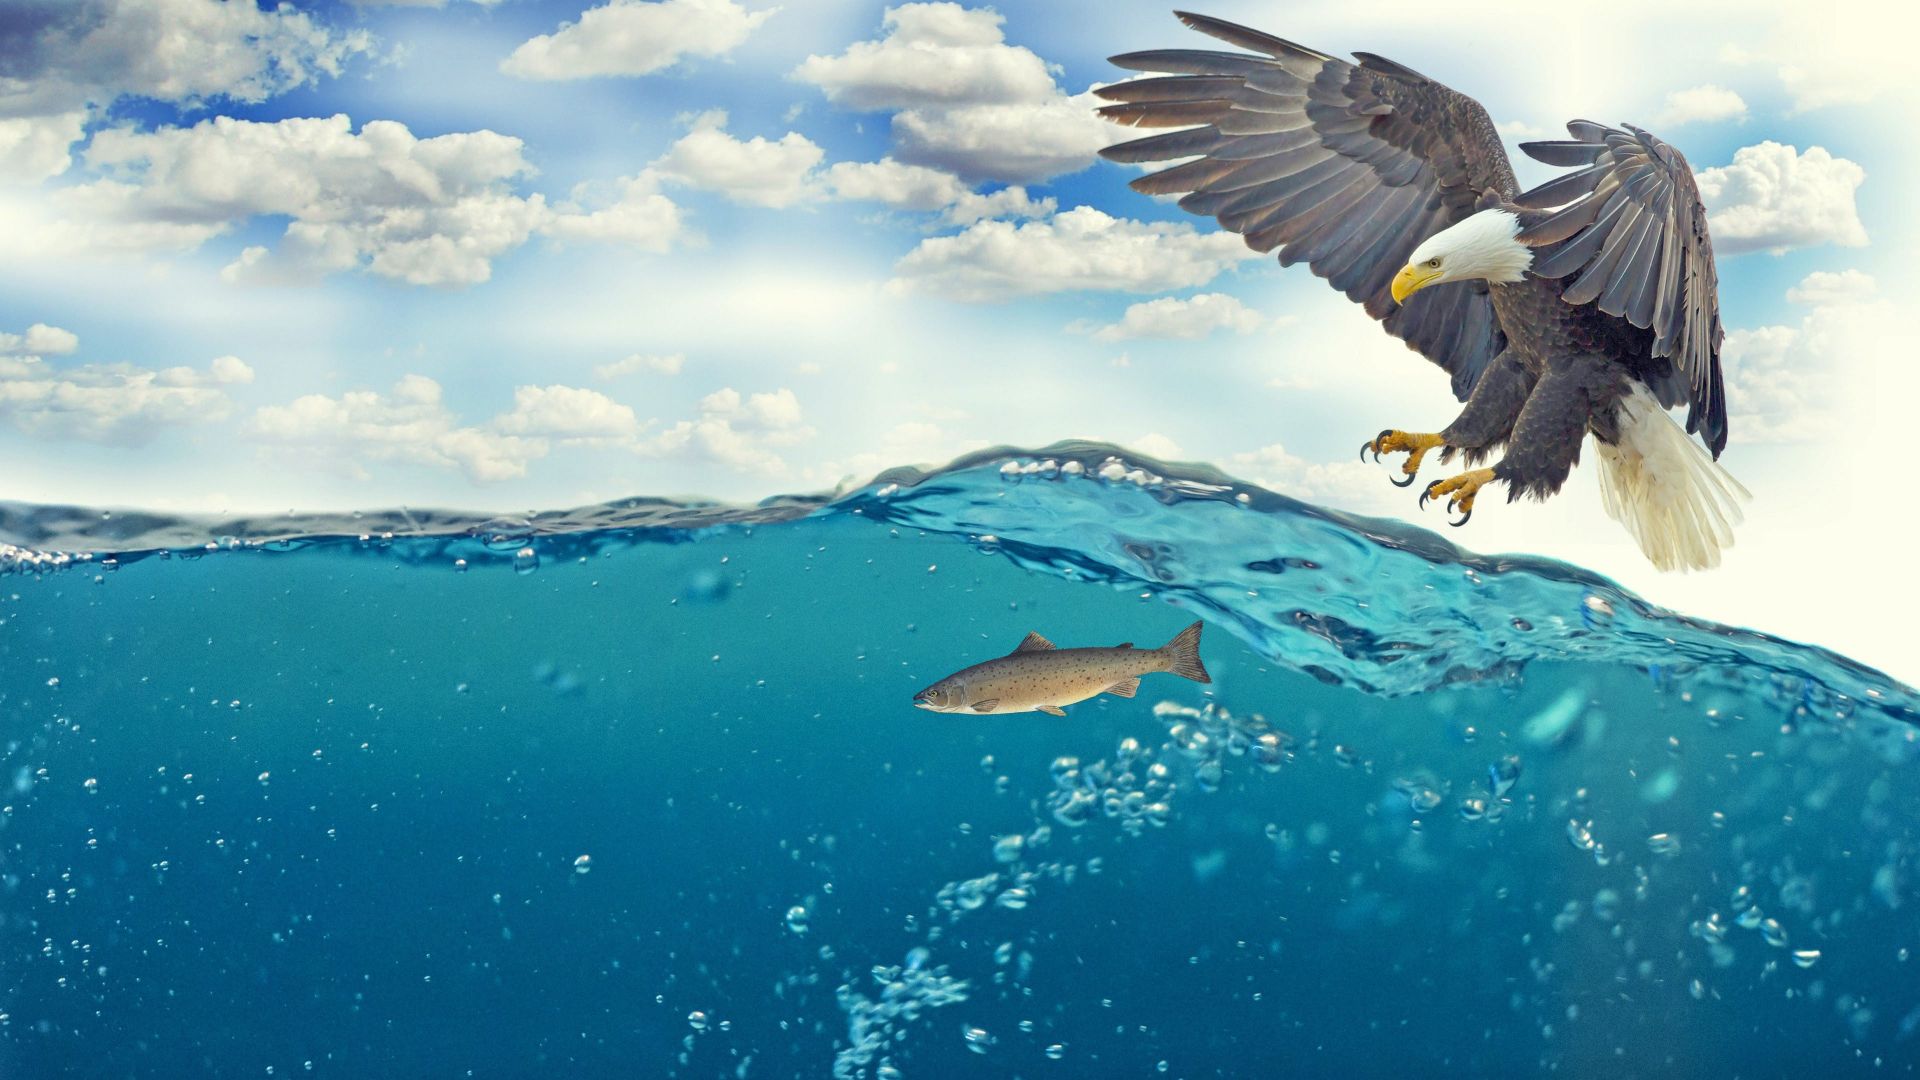 Fish, eagle, underwater, 4k (horizontal)